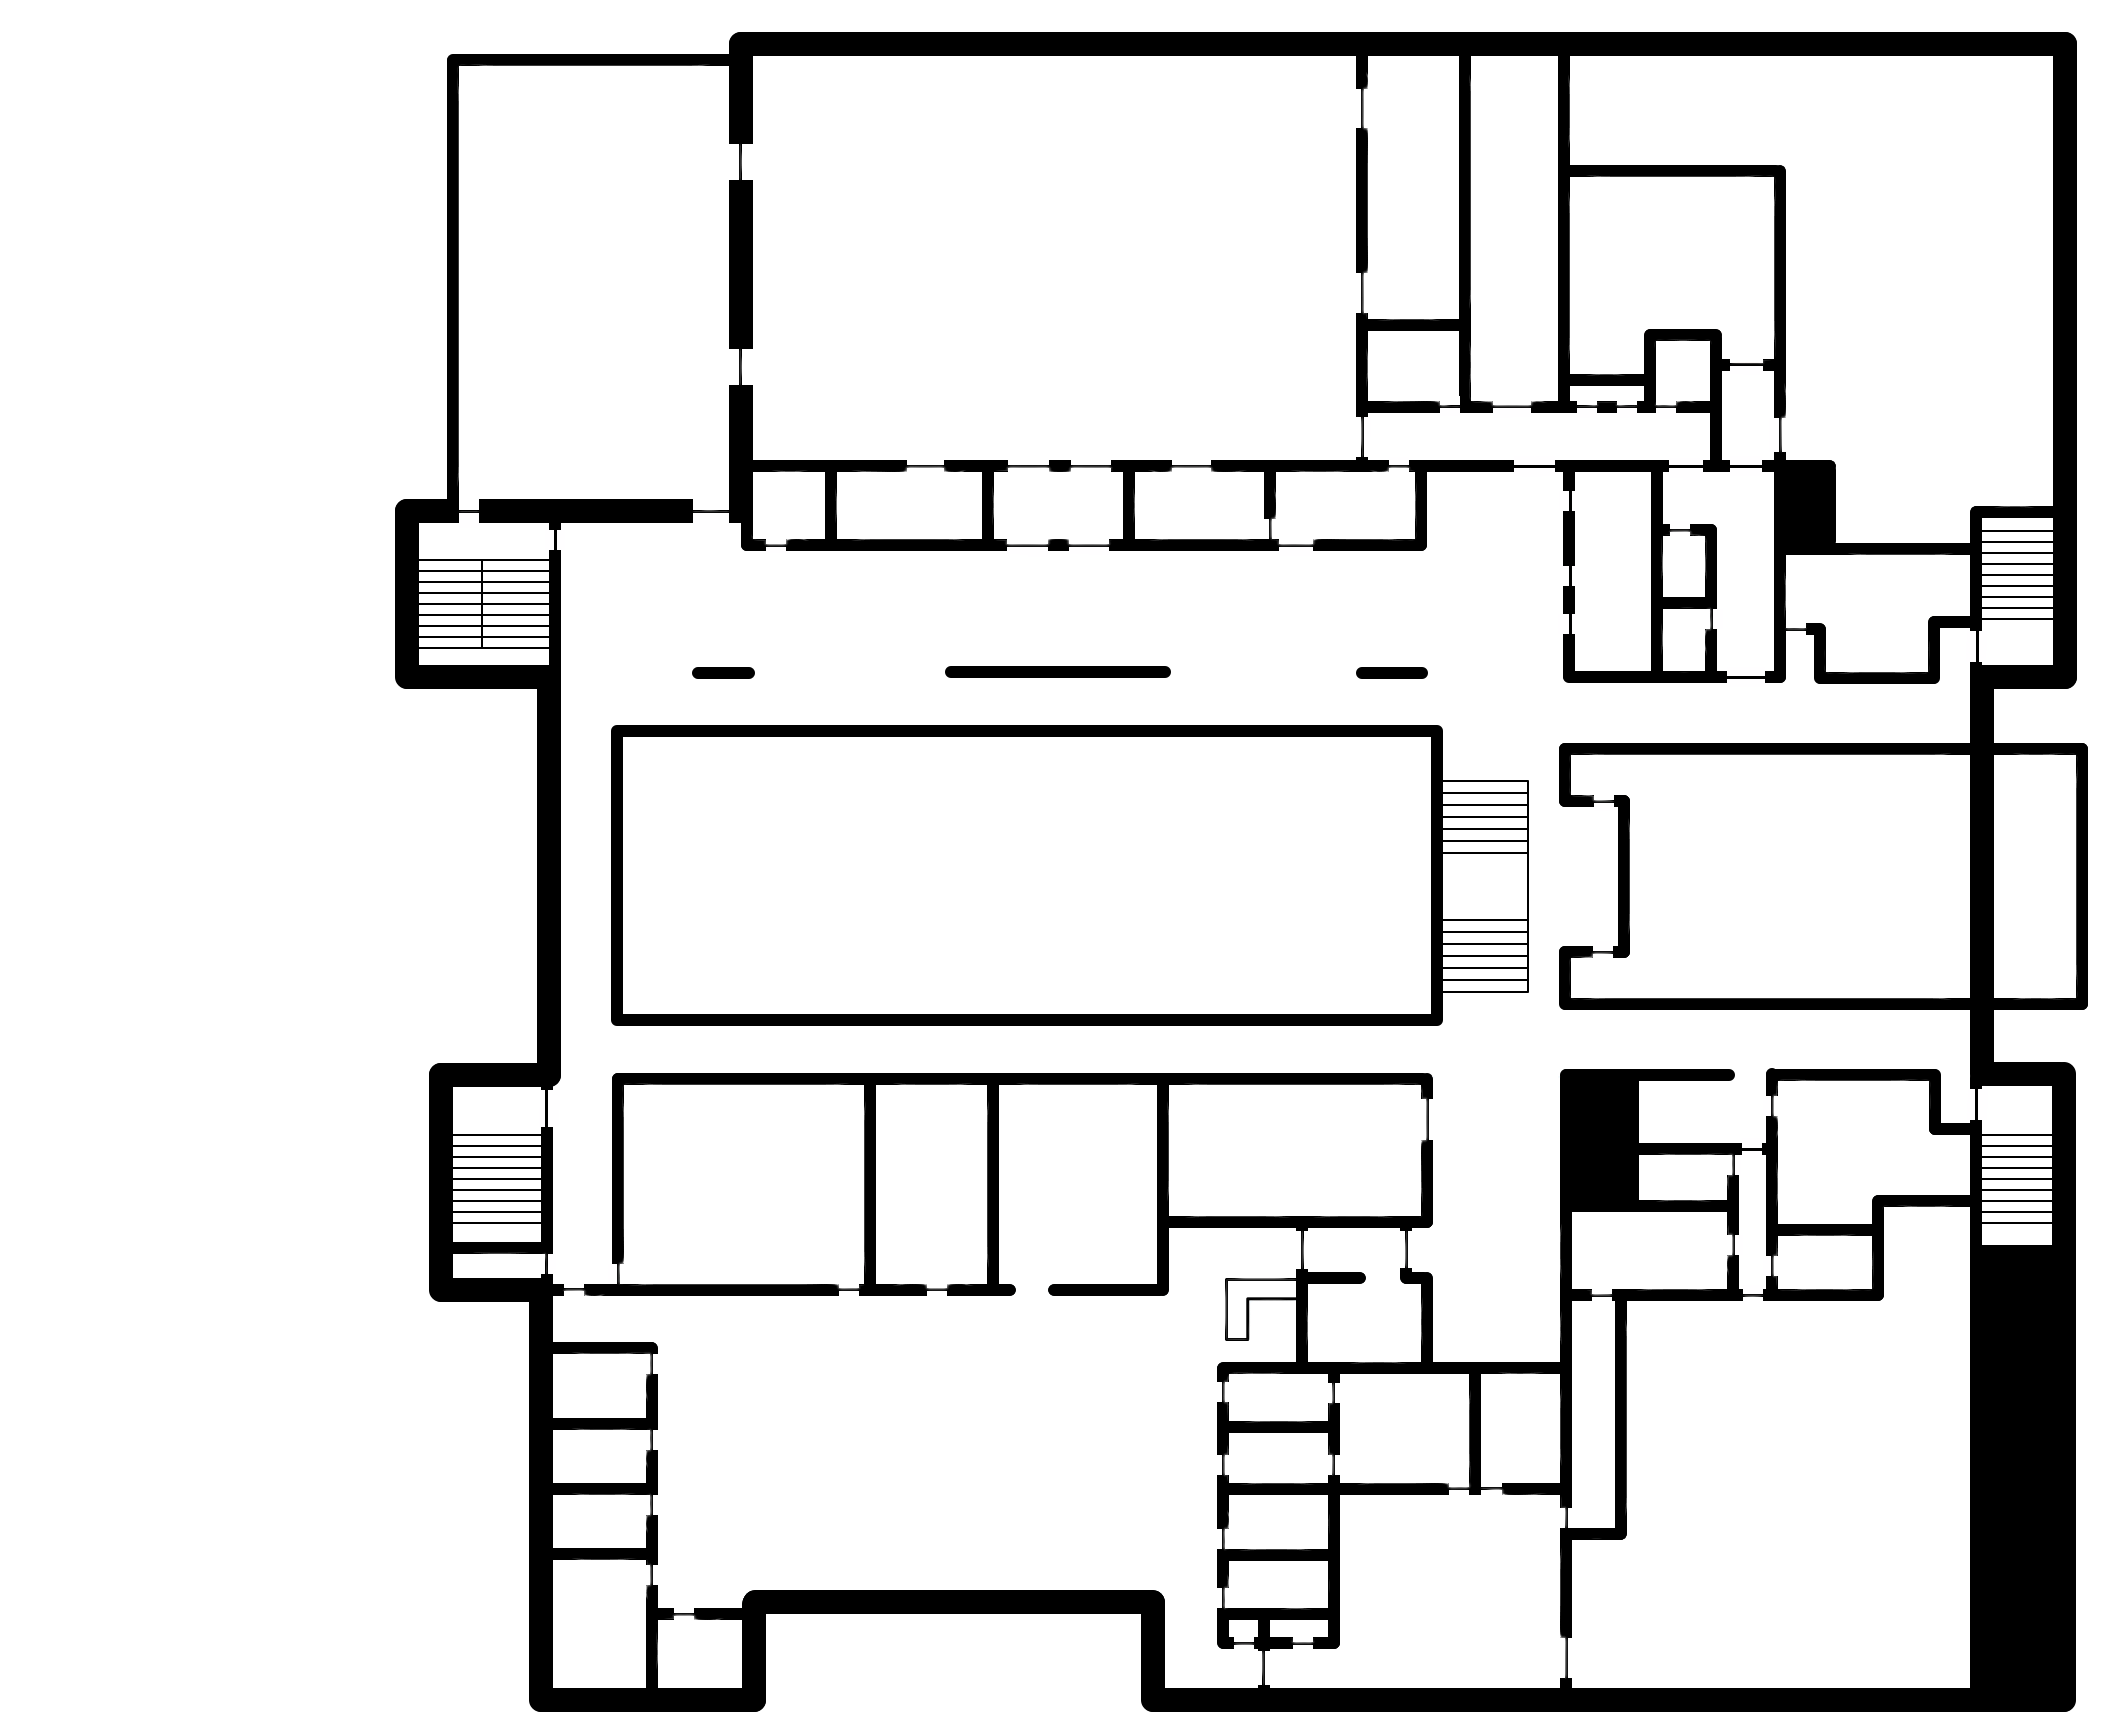 Floorplan of 